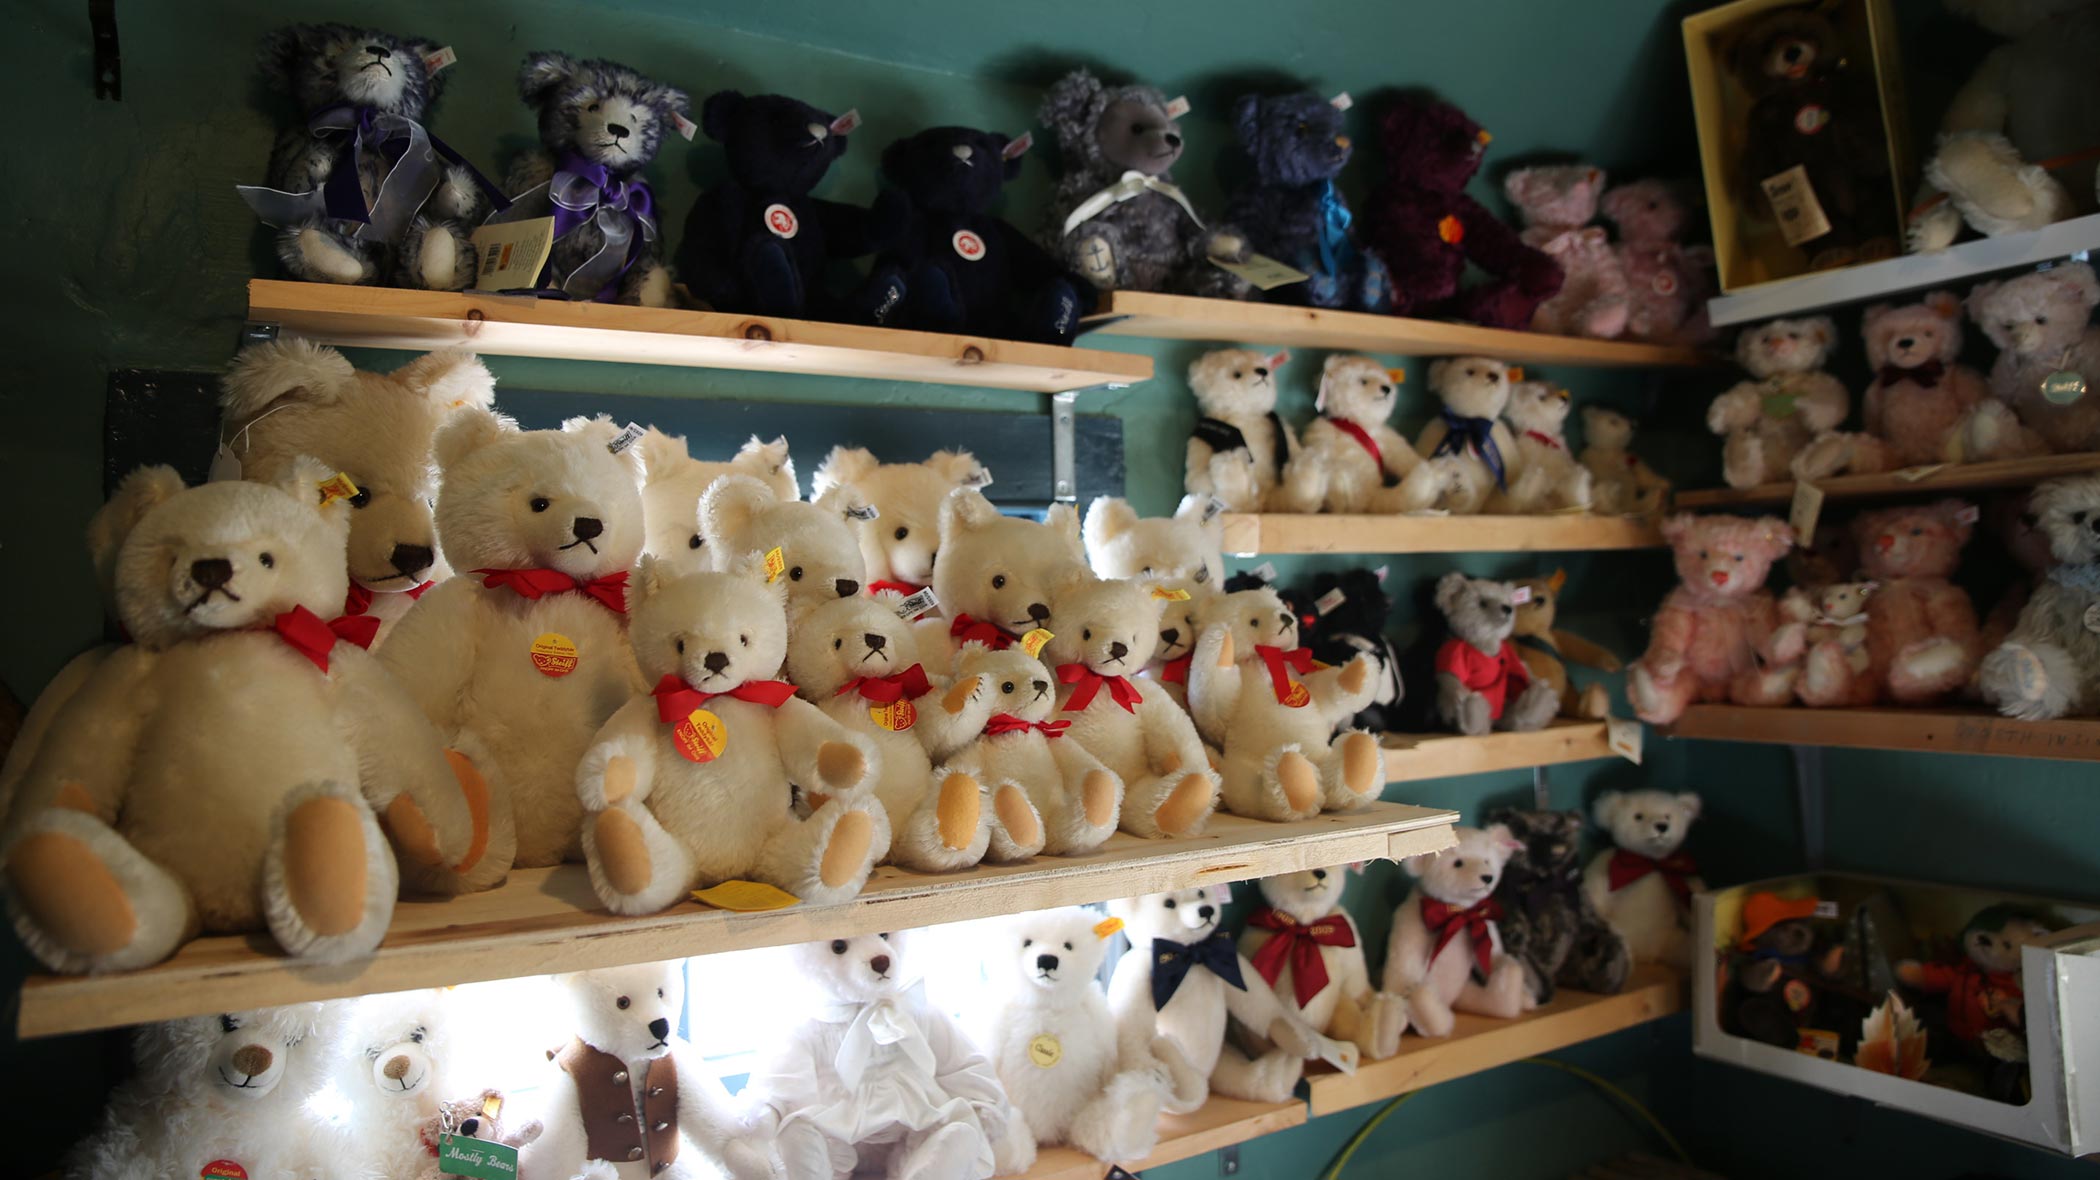 Teddy Bear Museum restaurants, addresses, phone numbers, photos